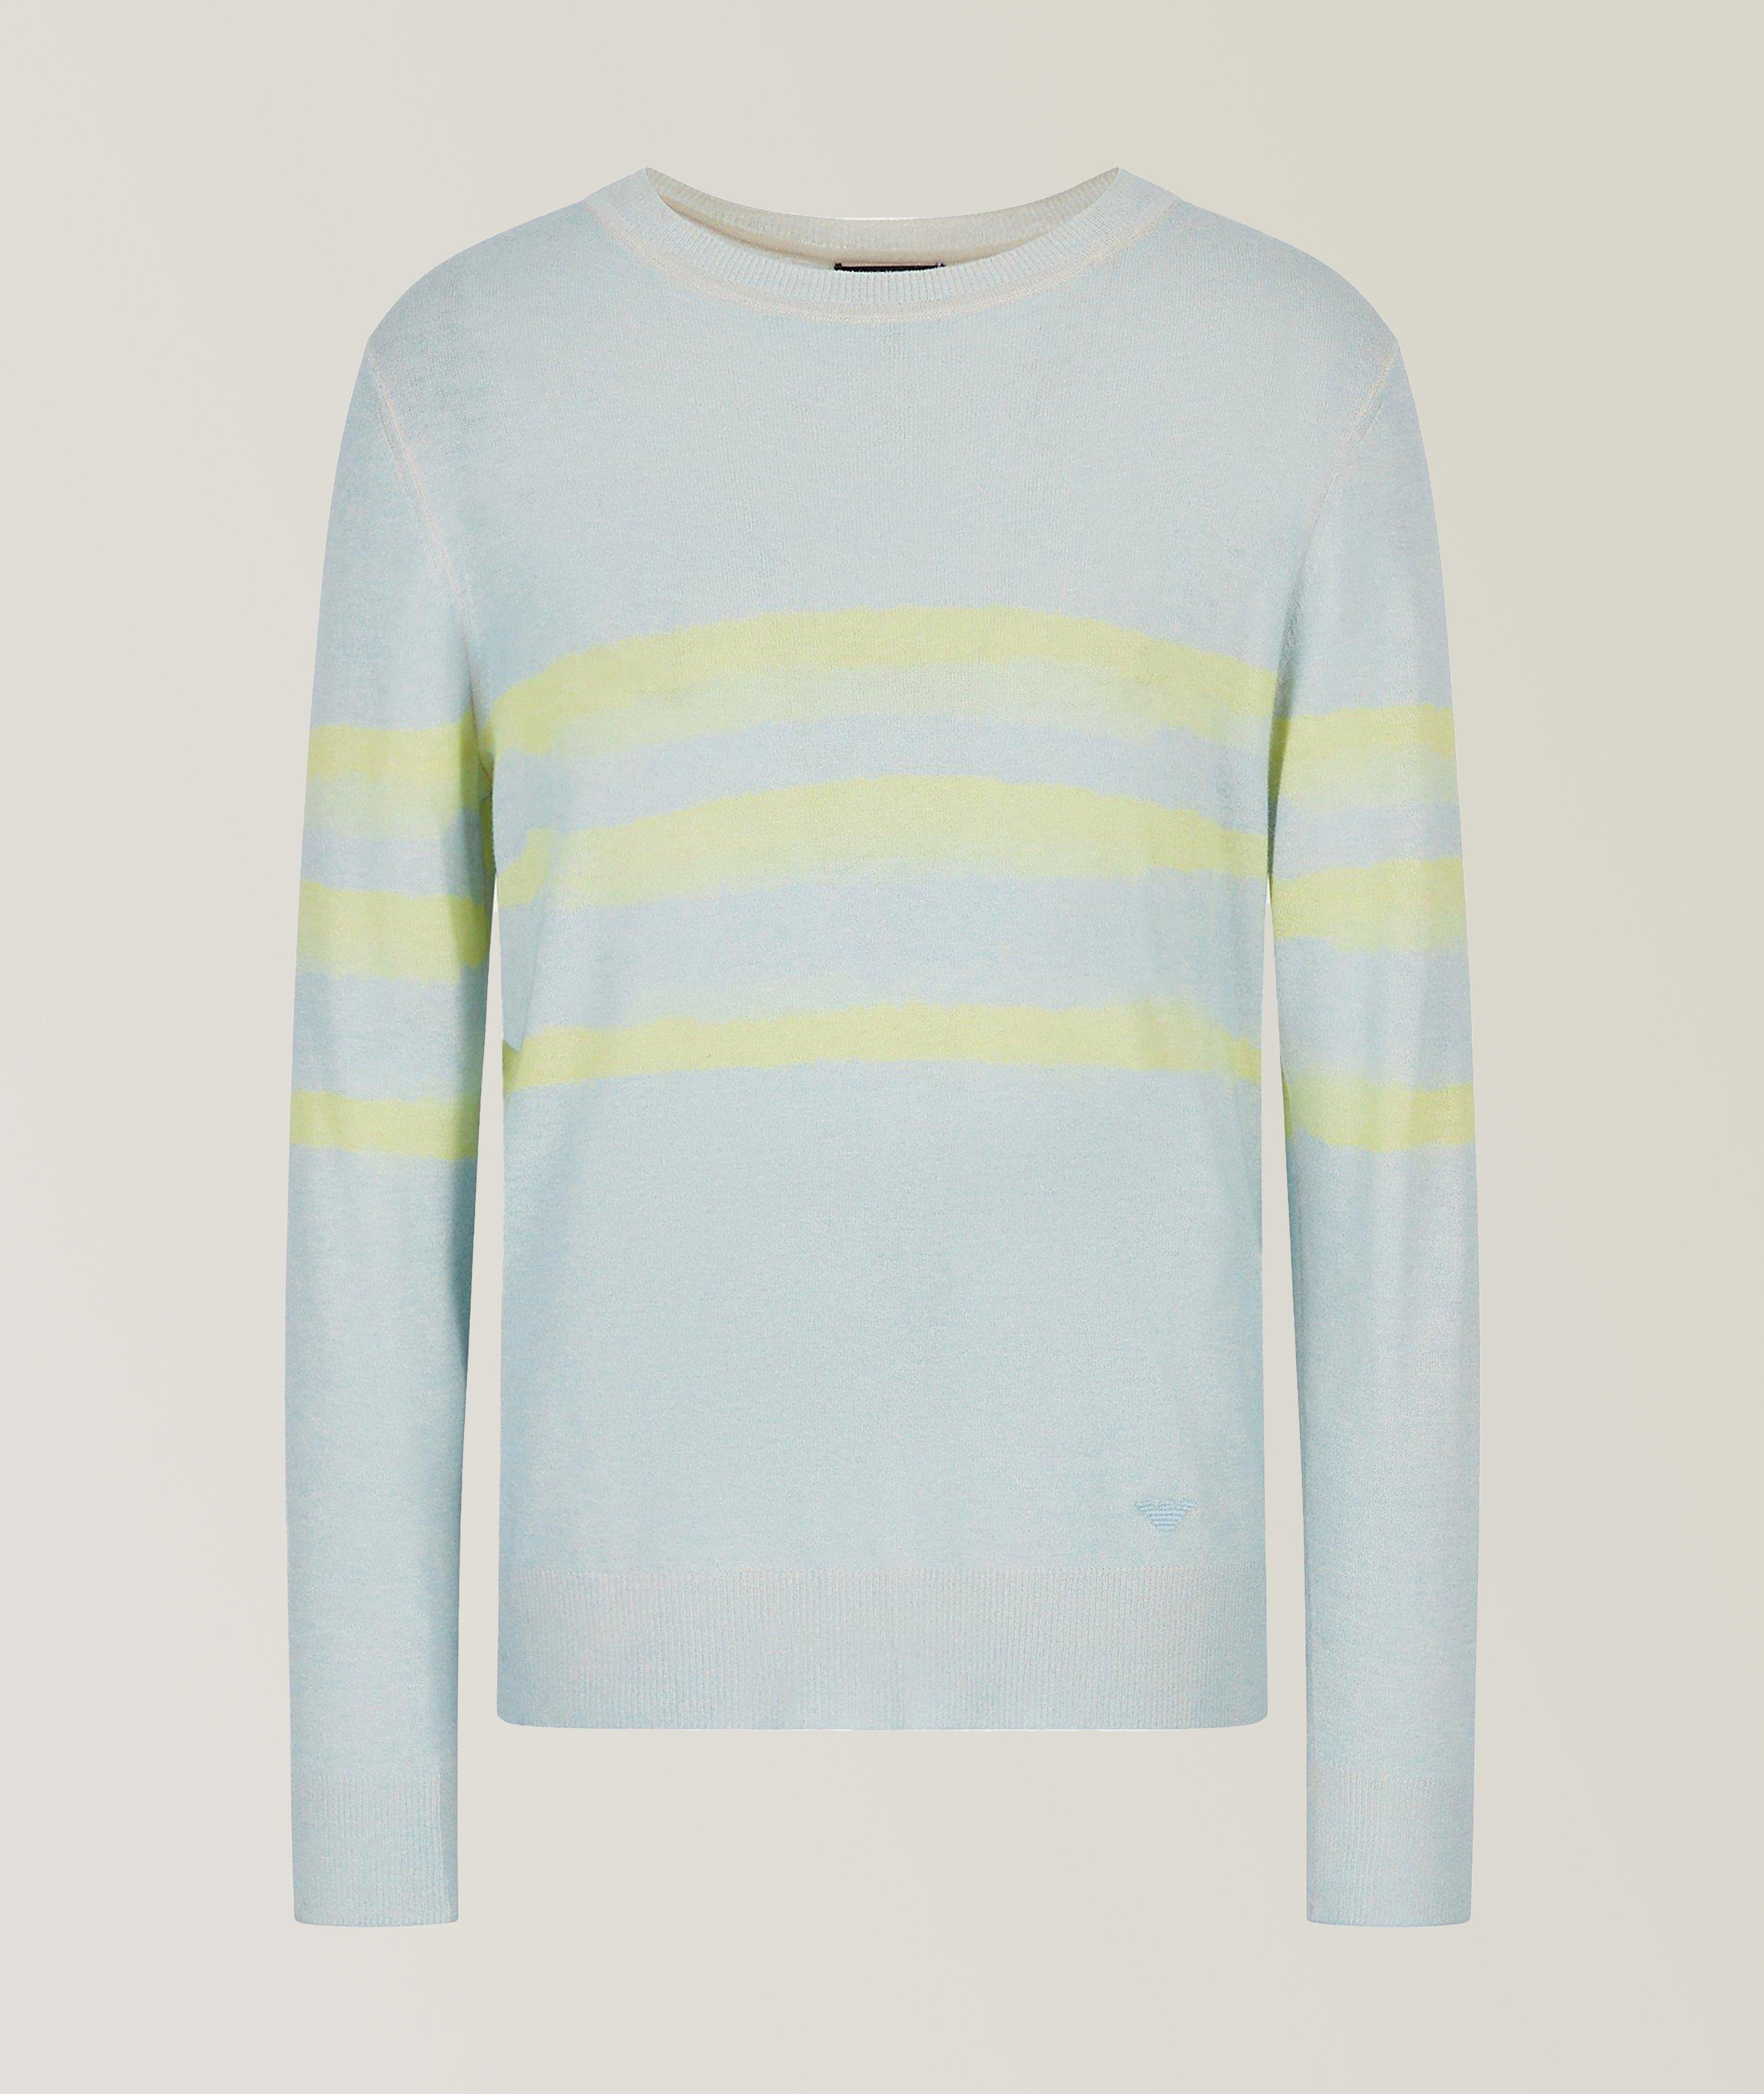 Watercolour Stripe Pattern Cashmere Sweater image 0